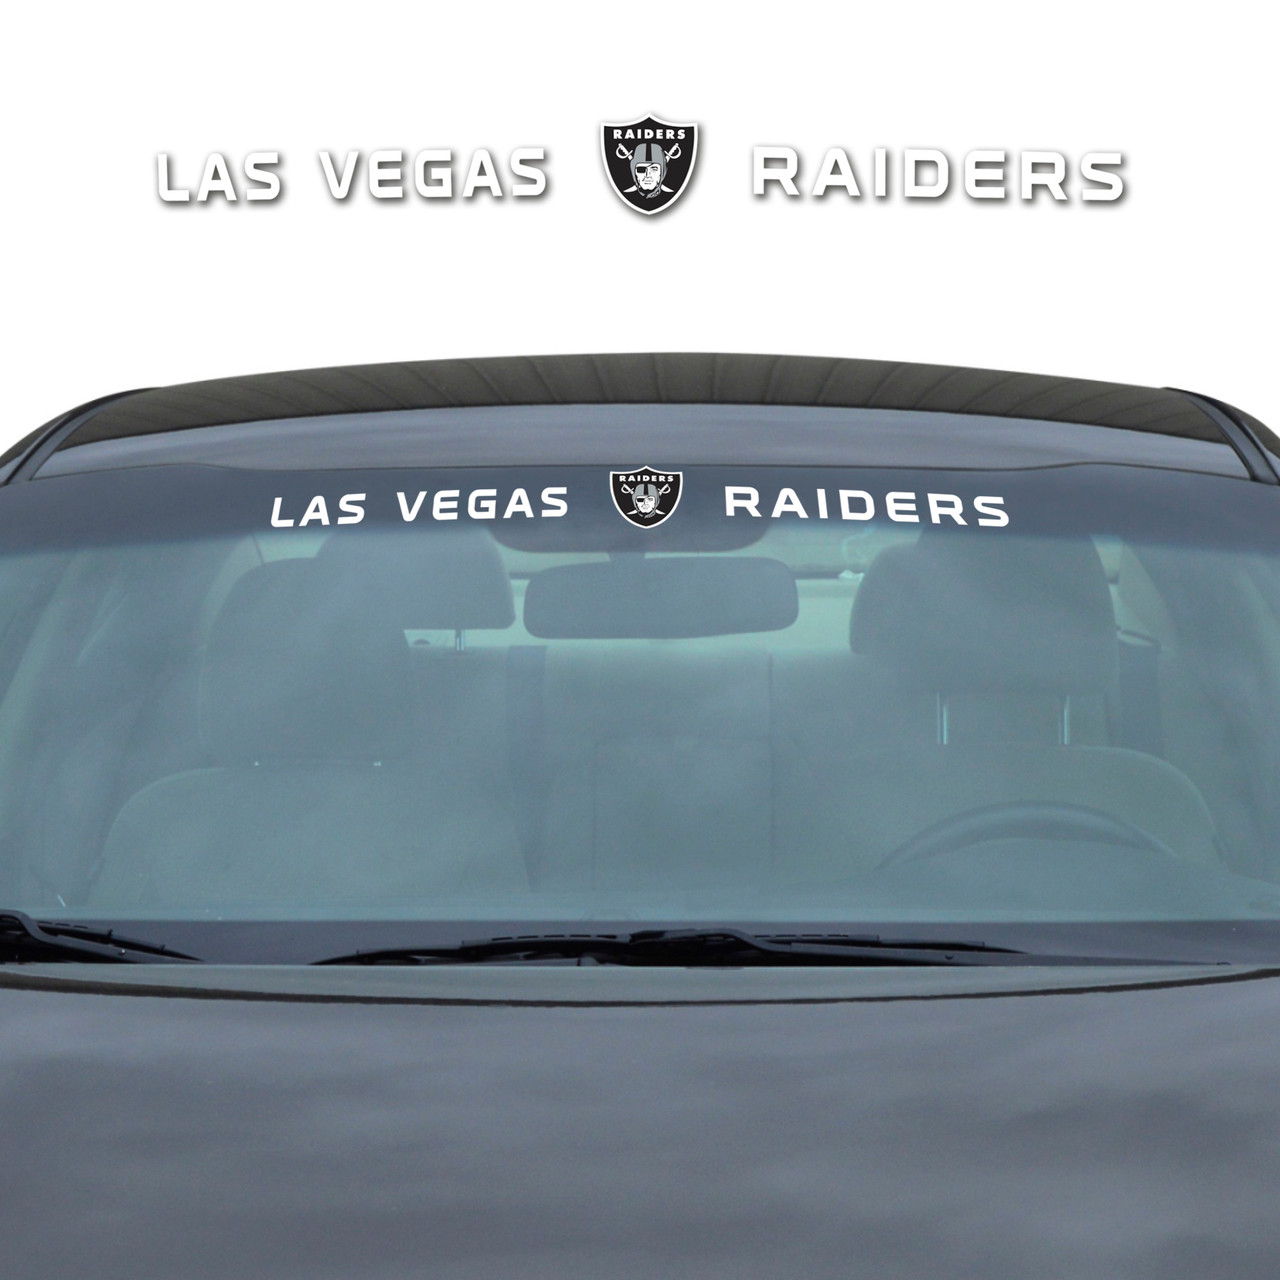 Las Vegas Raiders Vinyl Sticker Decals